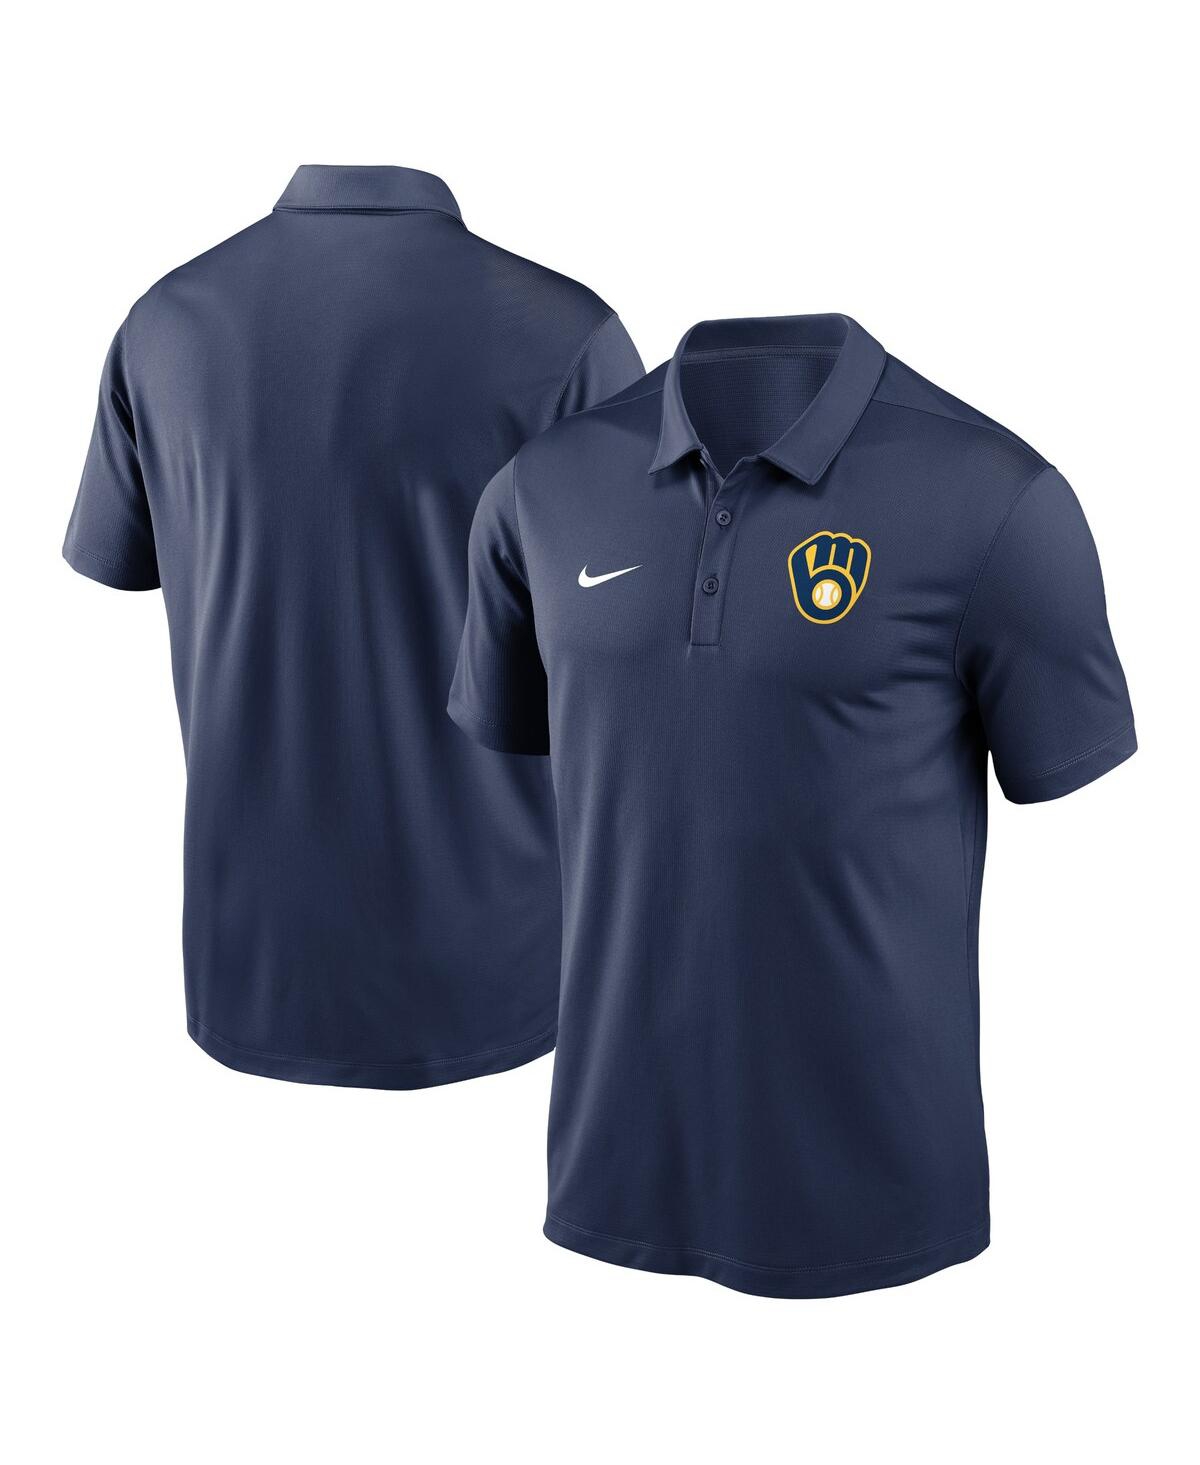 Nike Men's  Navy Milwaukee Brewers Agility Performance Polo Shirt